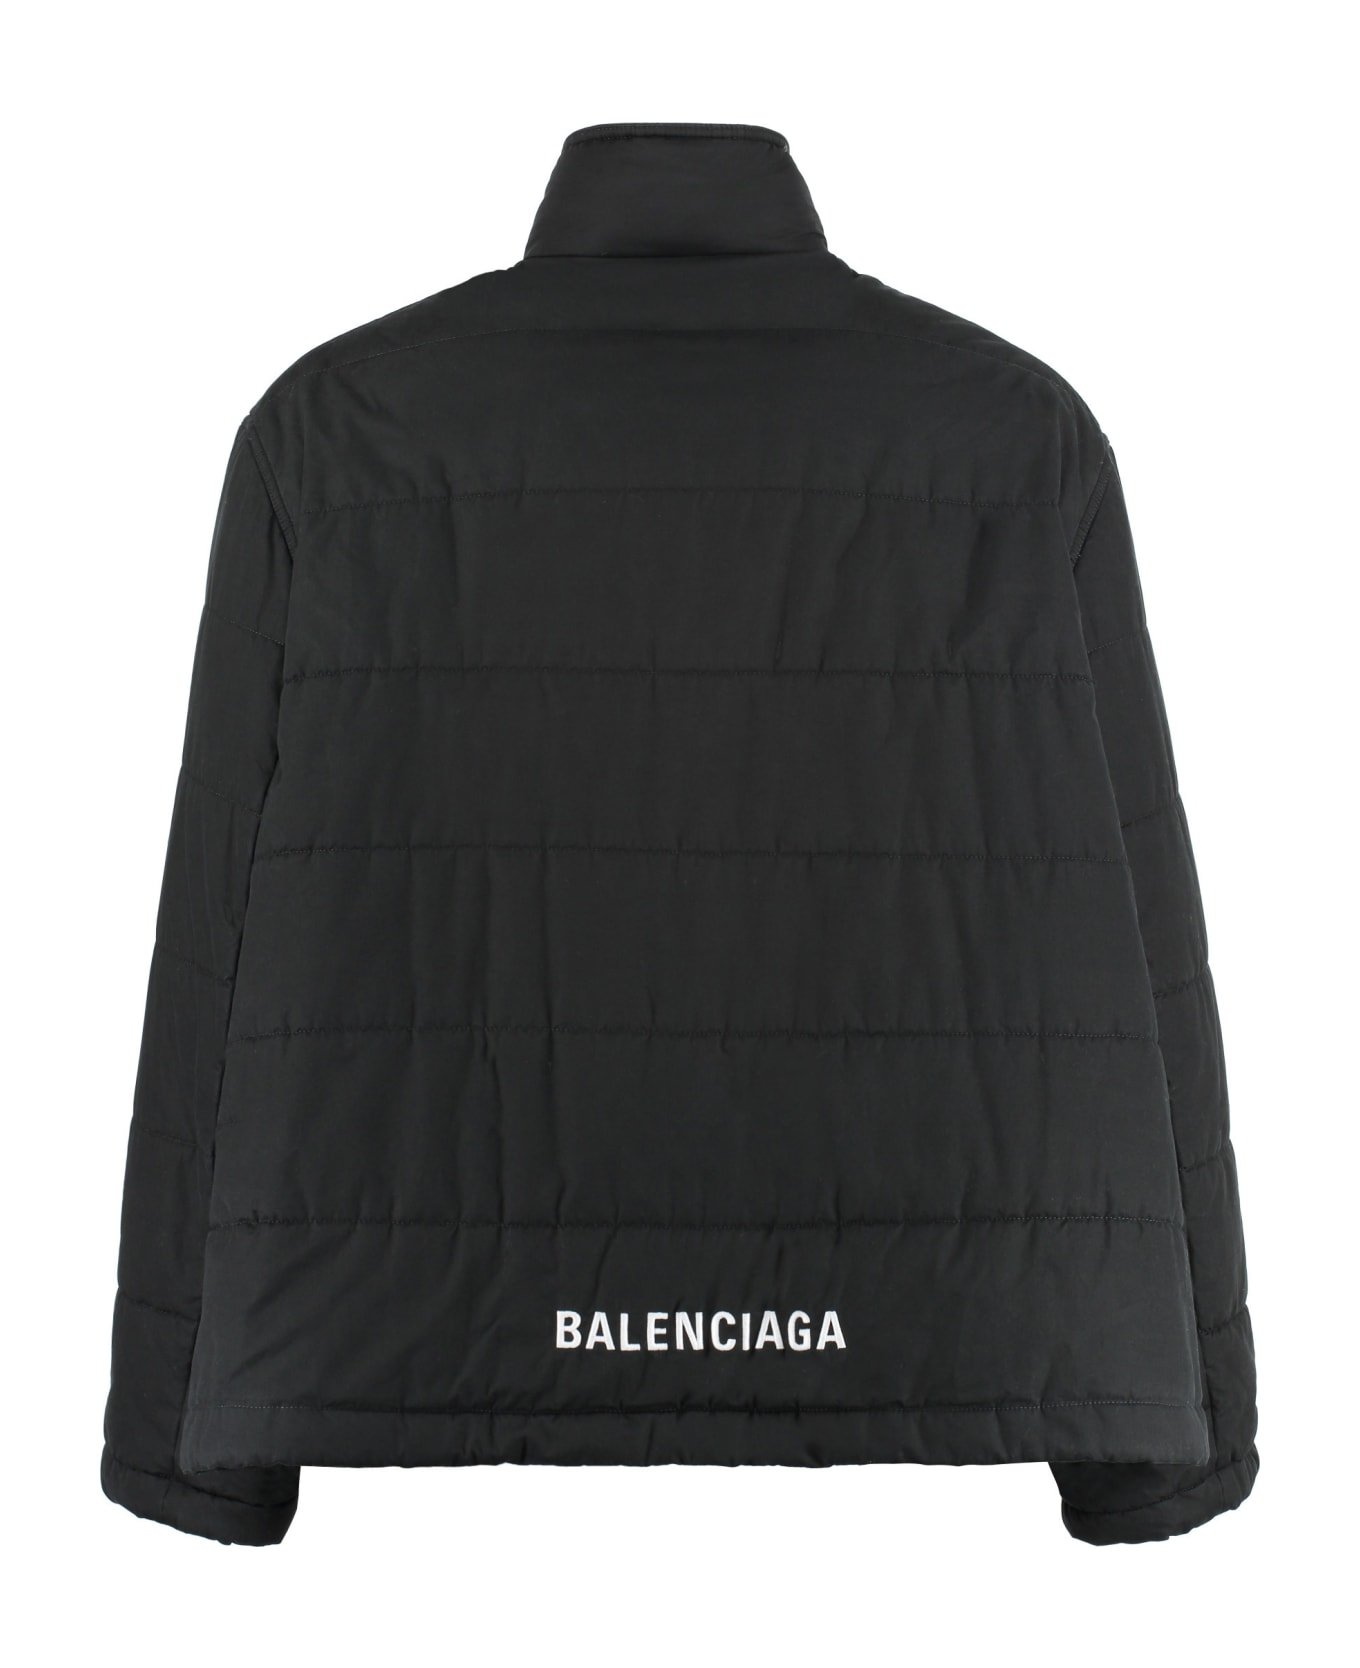 Balenciaga Oversize Down Jacket - black ダウンジャケット